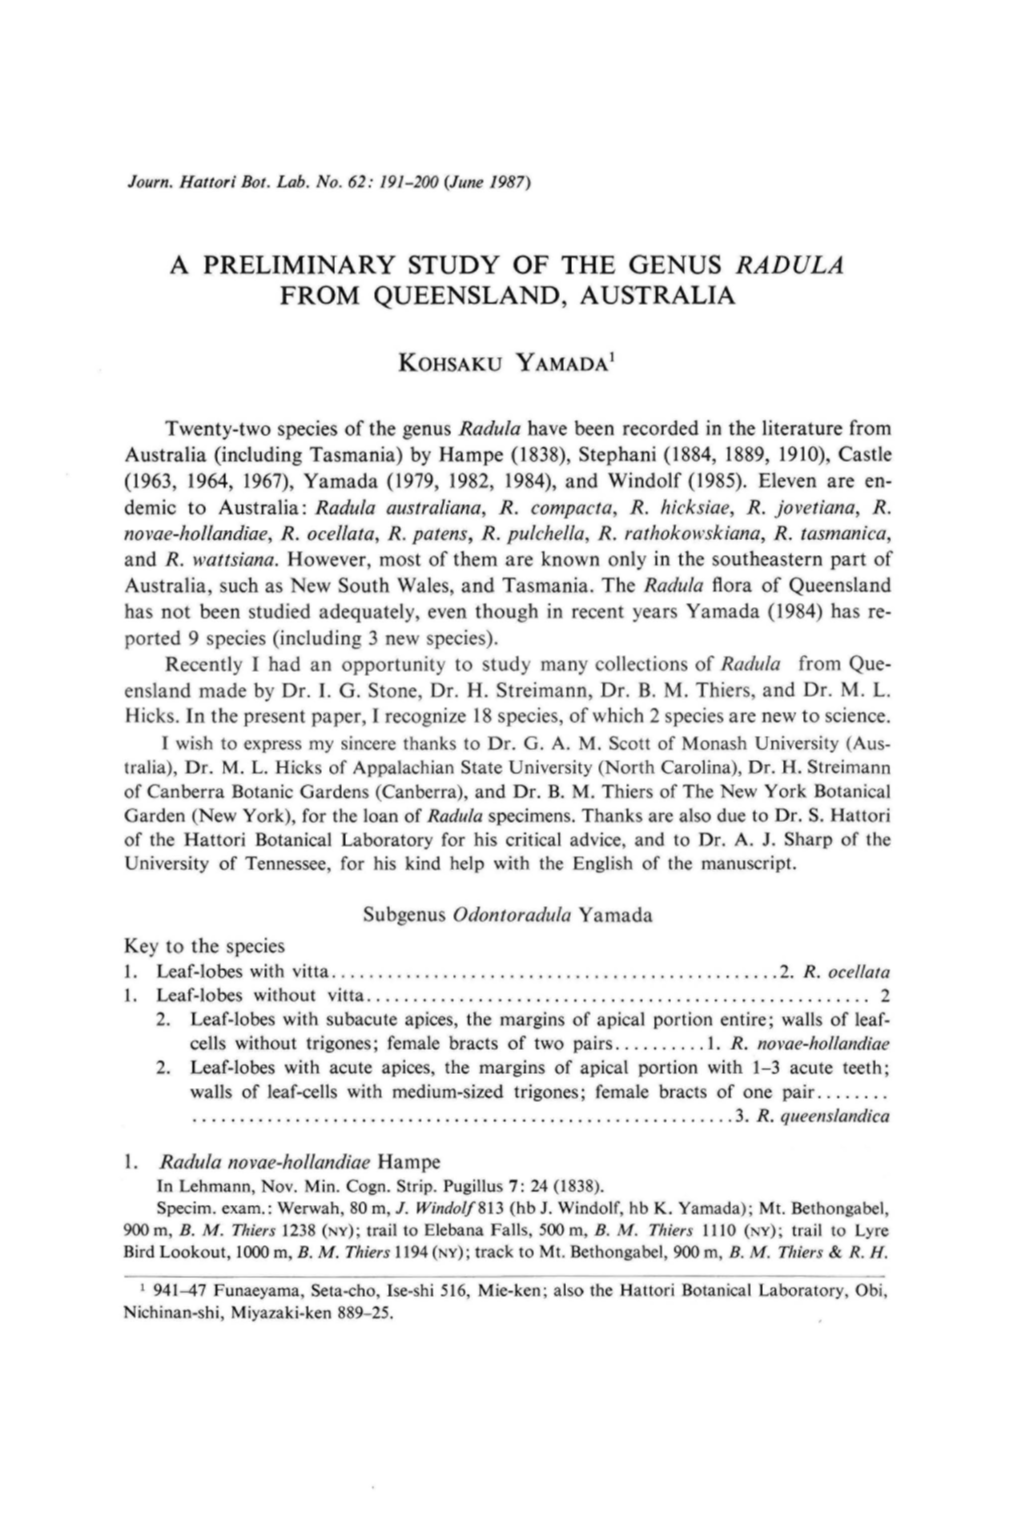 A Preliminary Study of the Genus Radula from Queensland, Australia